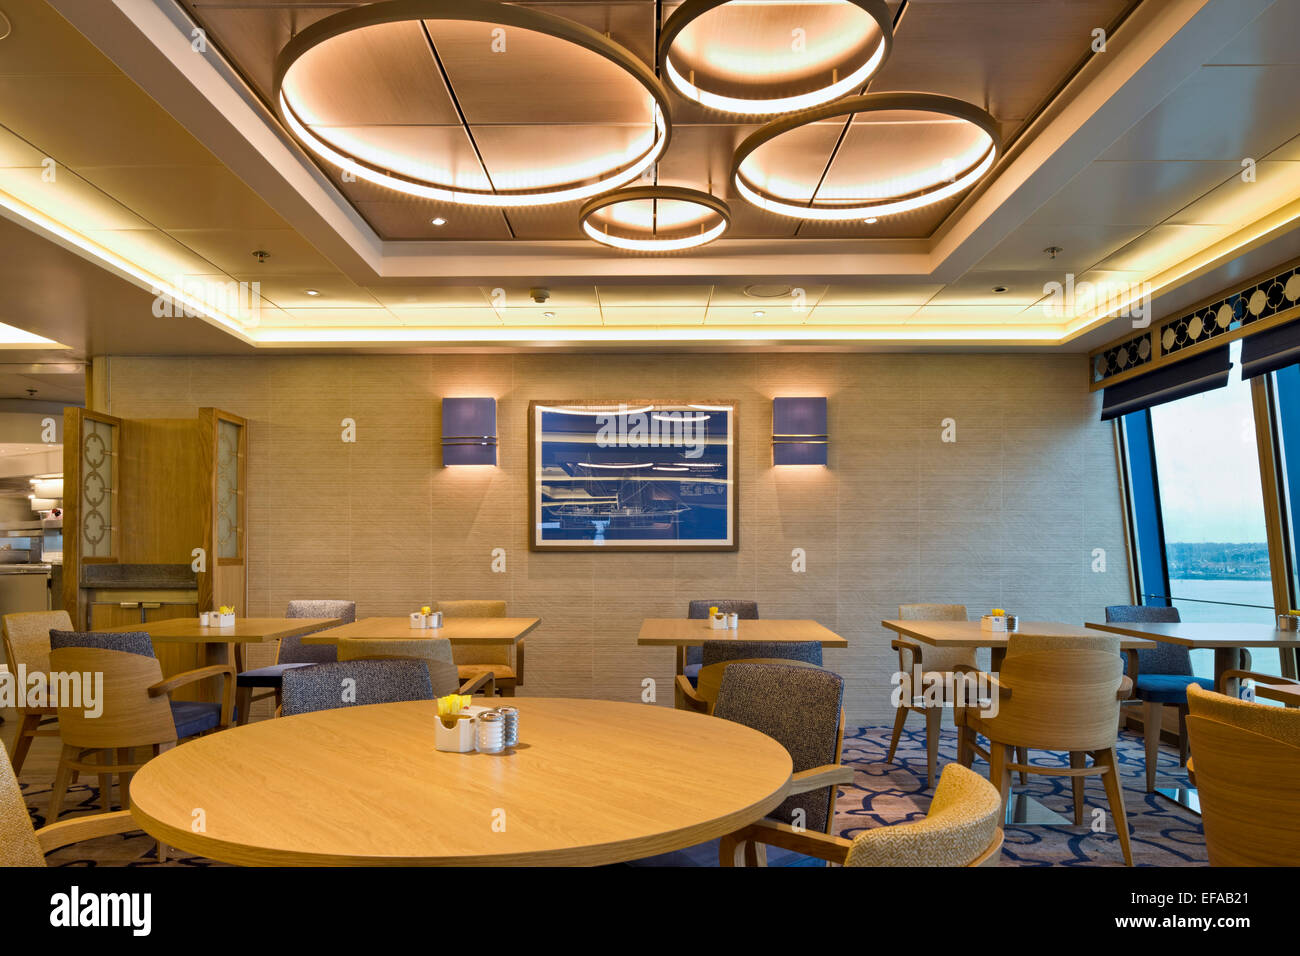 P & O Cruise Ship Interiors, Southampton, Vereinigtes Königreich. Architekt: SMC Design, 2014. Restaurant. Stockfoto